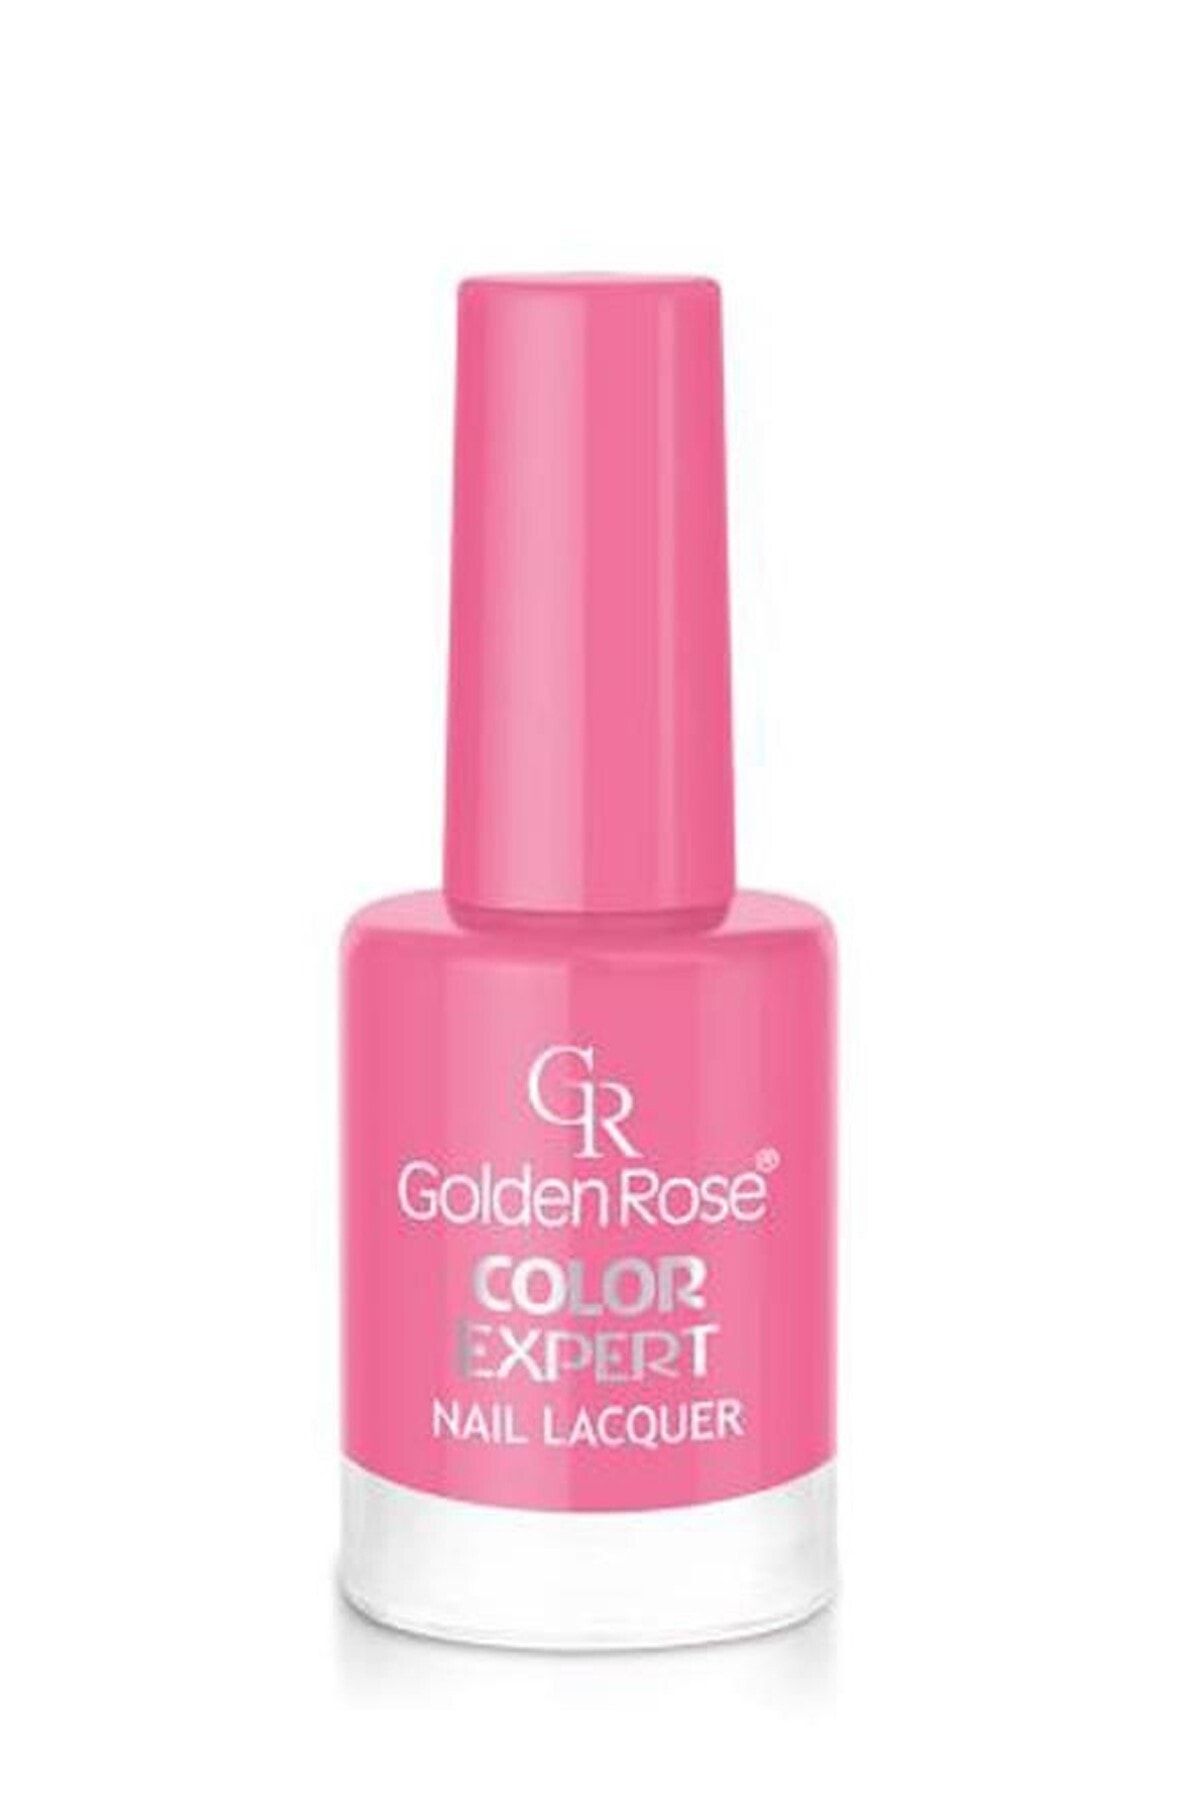 Golden Rose Oje - Color Expert Nail Lacquer No: 57 8691190703578